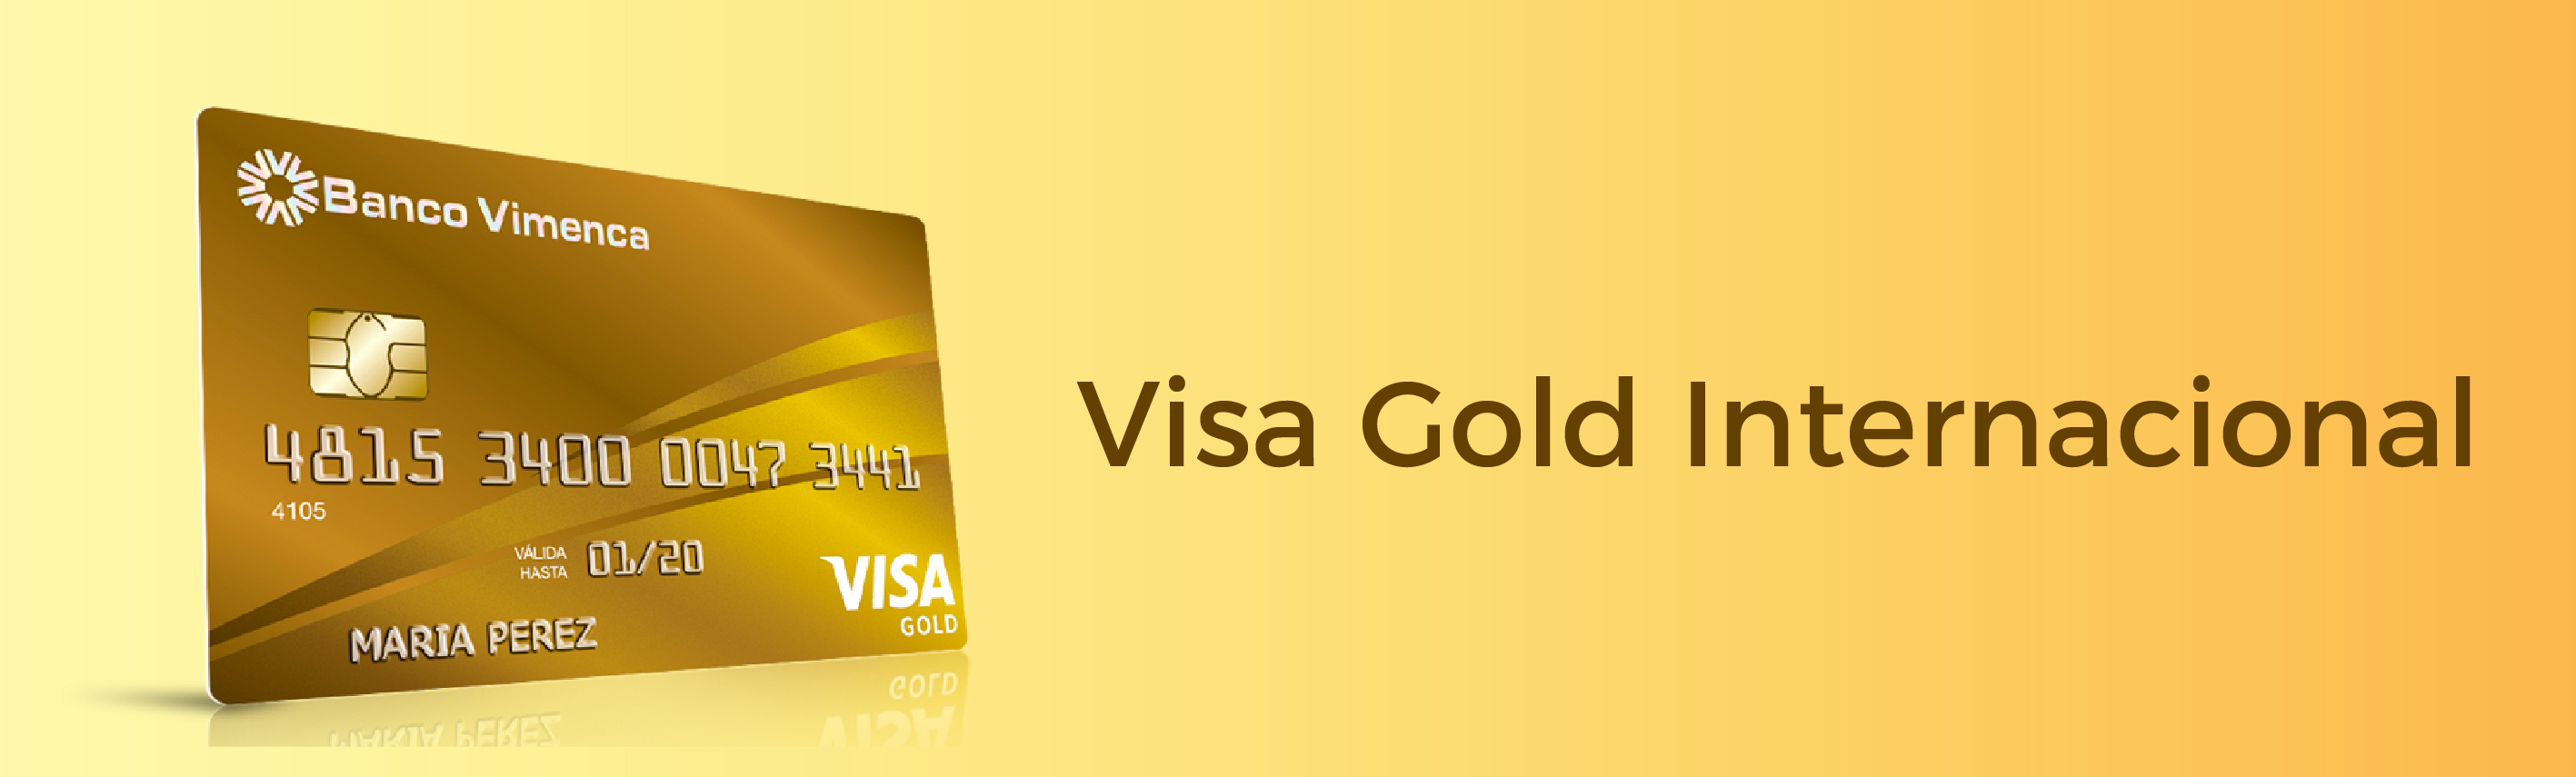 Tarjeta de Crédito Visa Gold Internacional